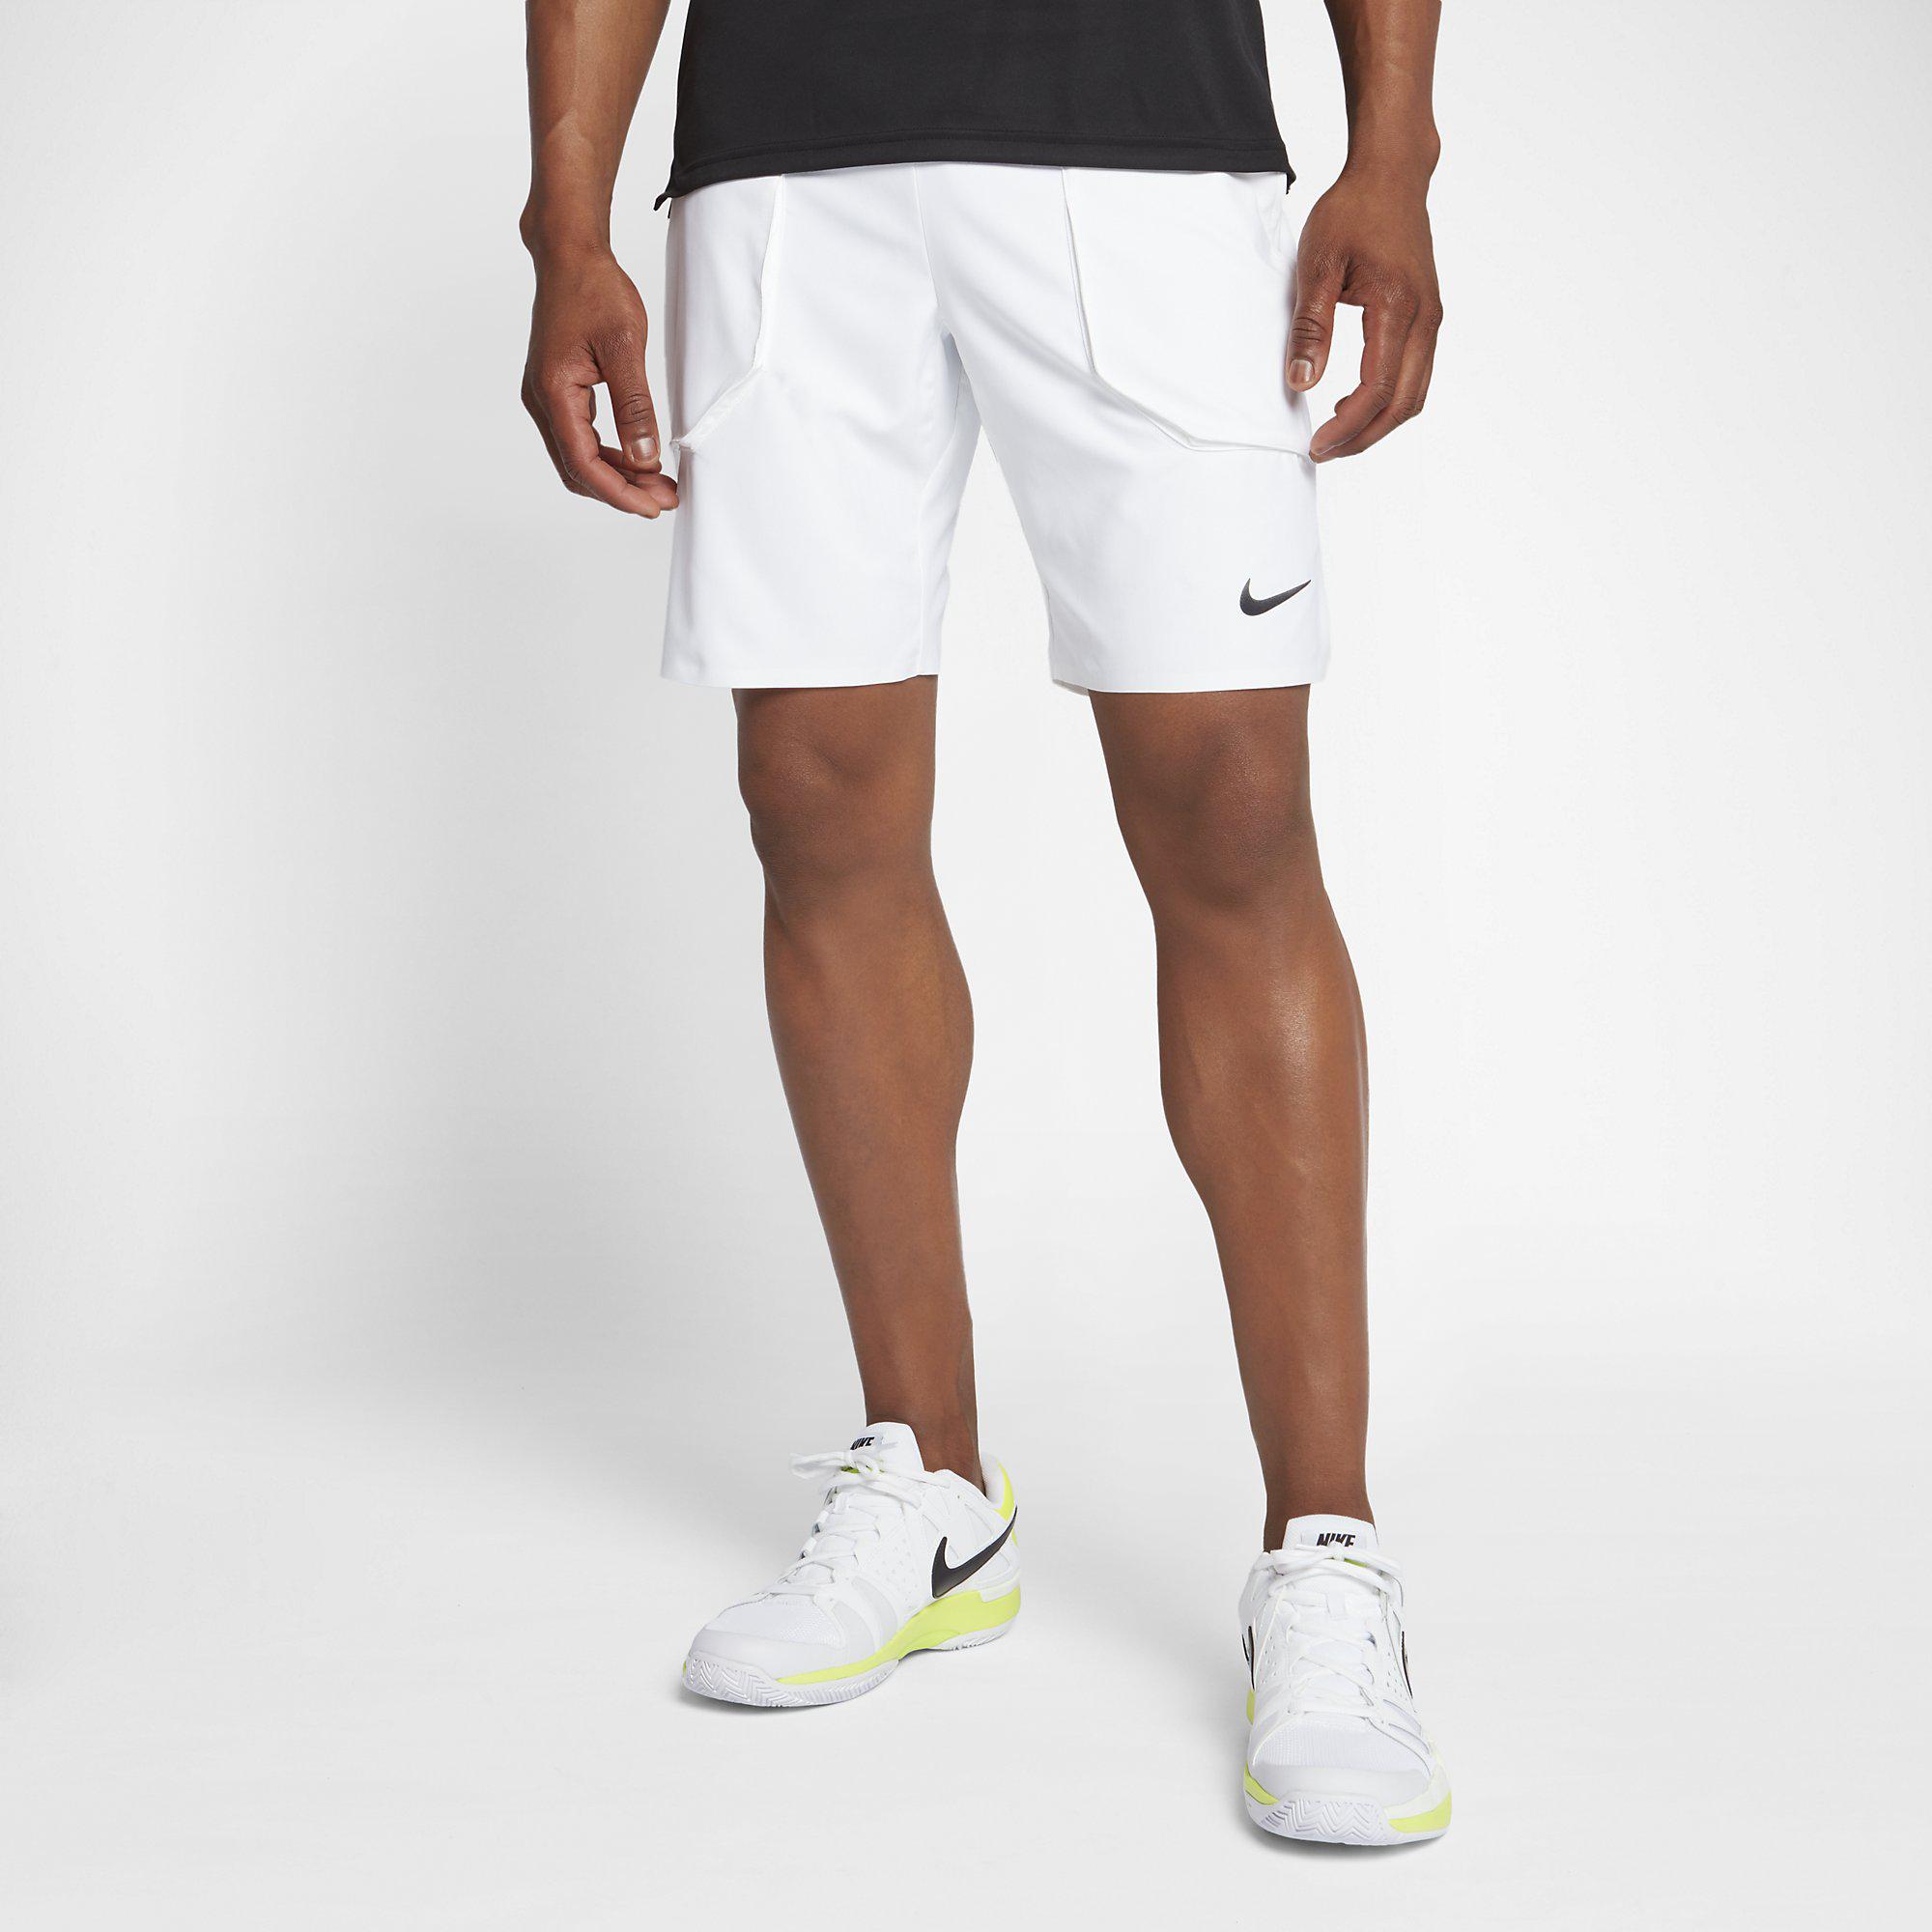 Nike Mens Court Flex 9 Inch Tennis Shorts - White - Tennisnuts.com